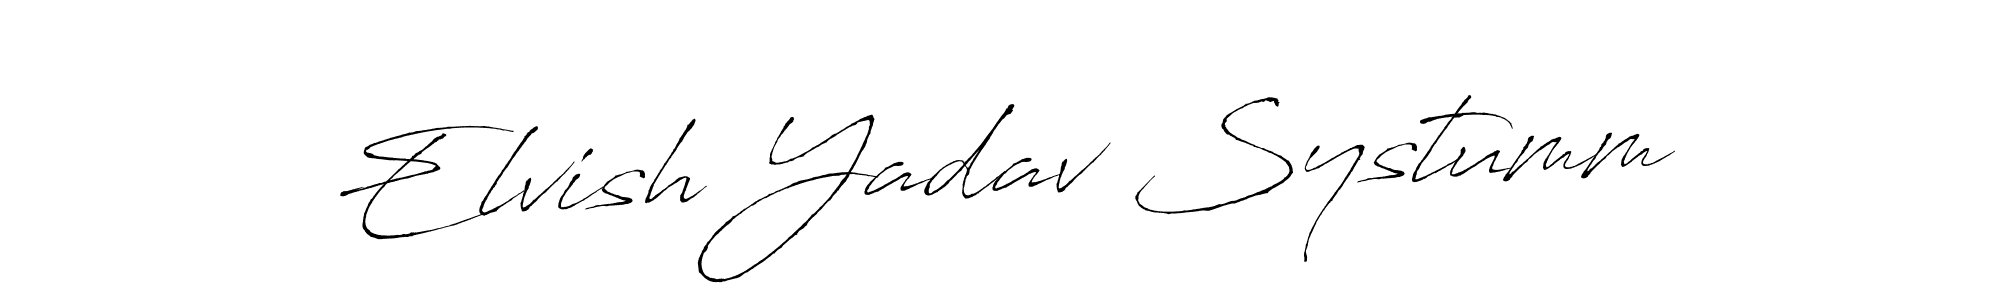 How to Draw Elvish Yadav Systumm signature style? Antro_Vectra is a latest design signature styles for name Elvish Yadav Systumm. Elvish Yadav Systumm signature style 6 images and pictures png